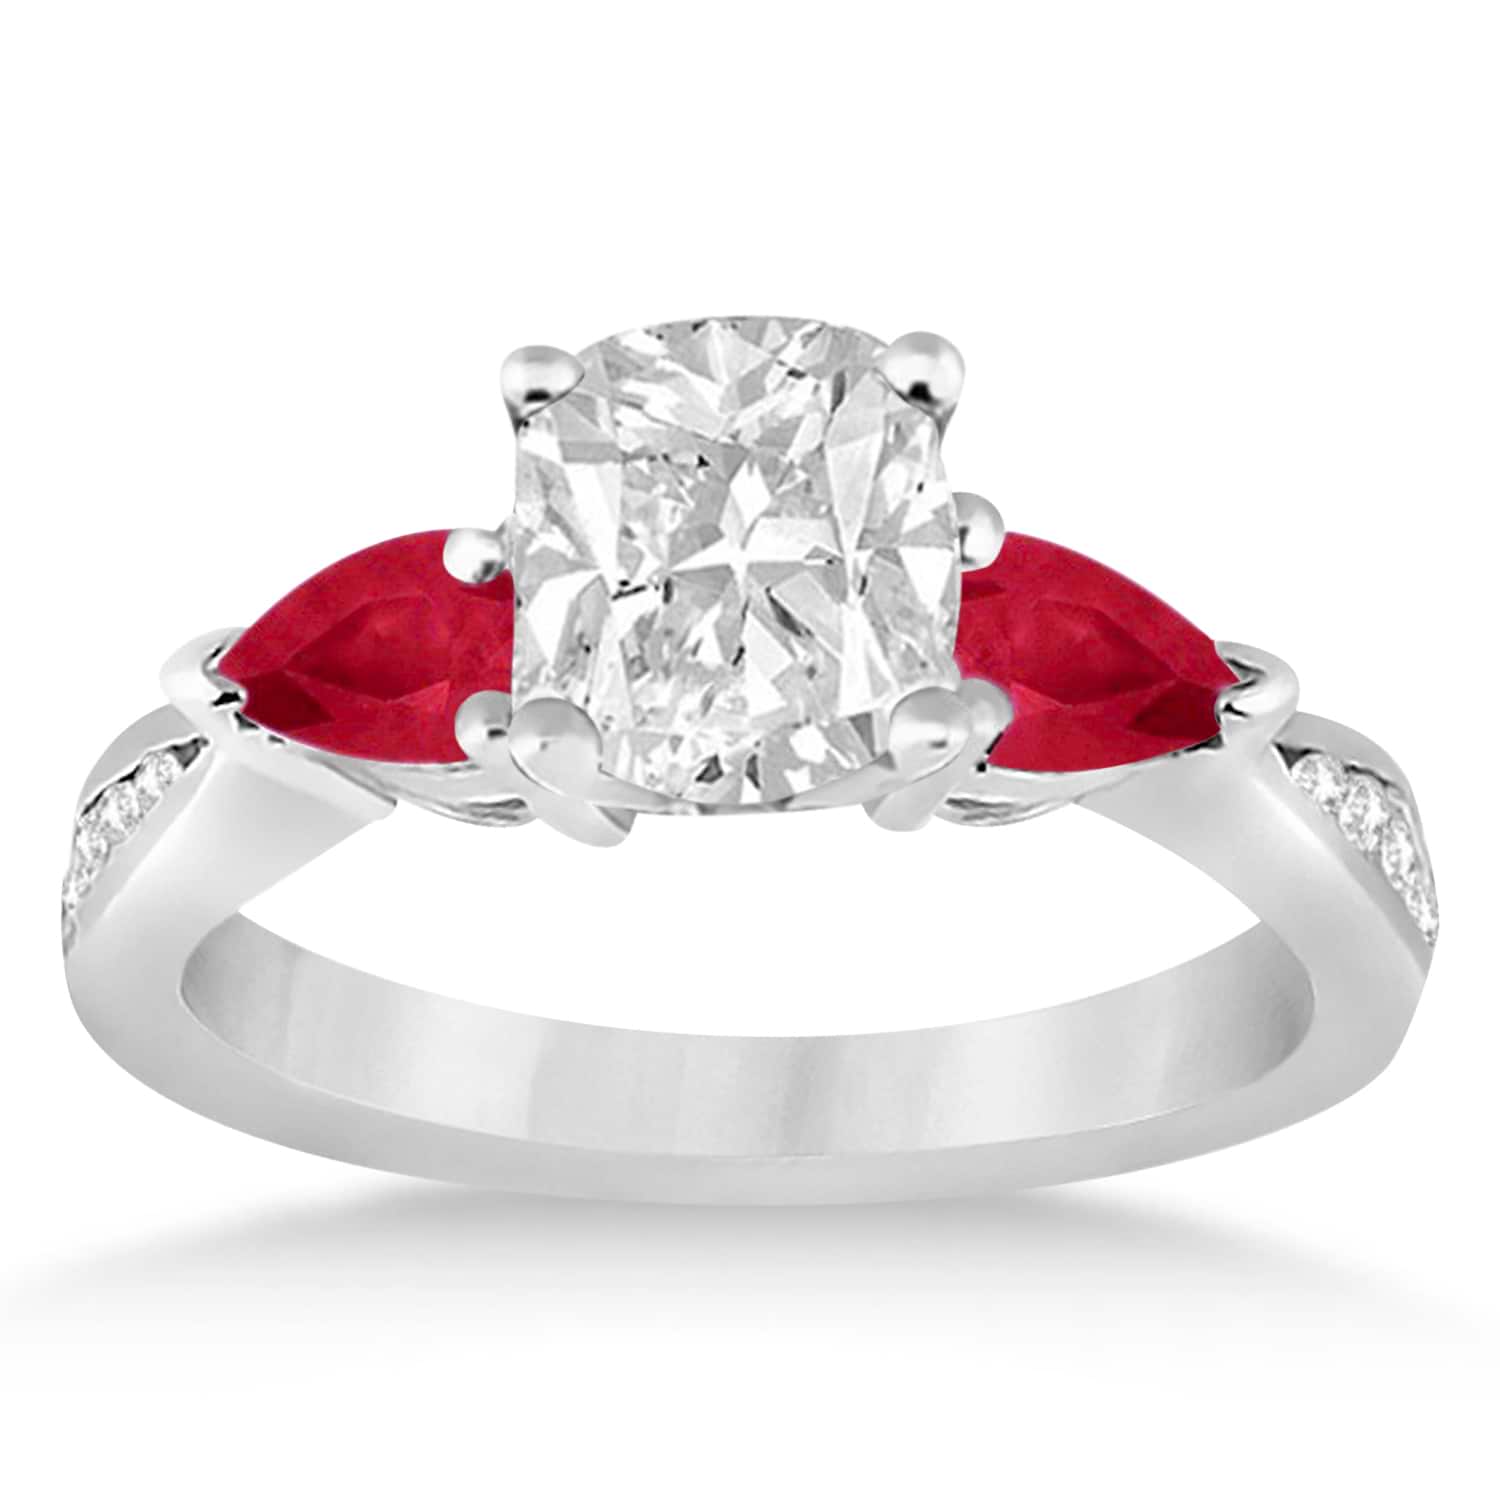 Cushion Diamond & Pear Ruby Gemstone Engagement Ring Palladium (1.29ct)